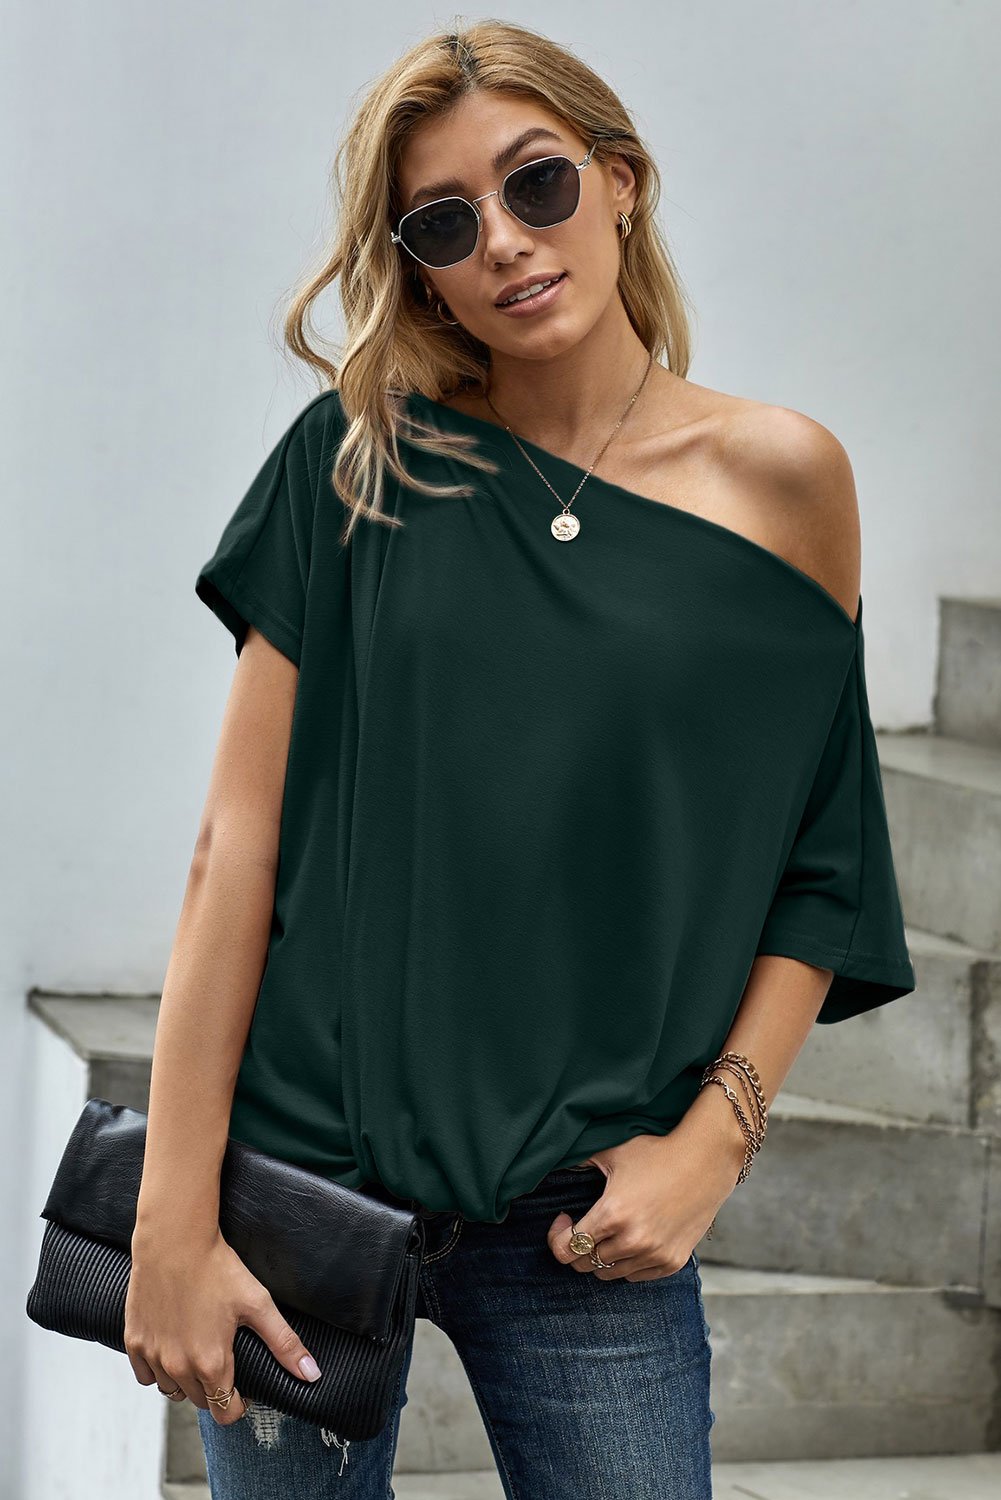 T-shirt Femme Vert Decontracte Epaules Denudees Manches Courtes